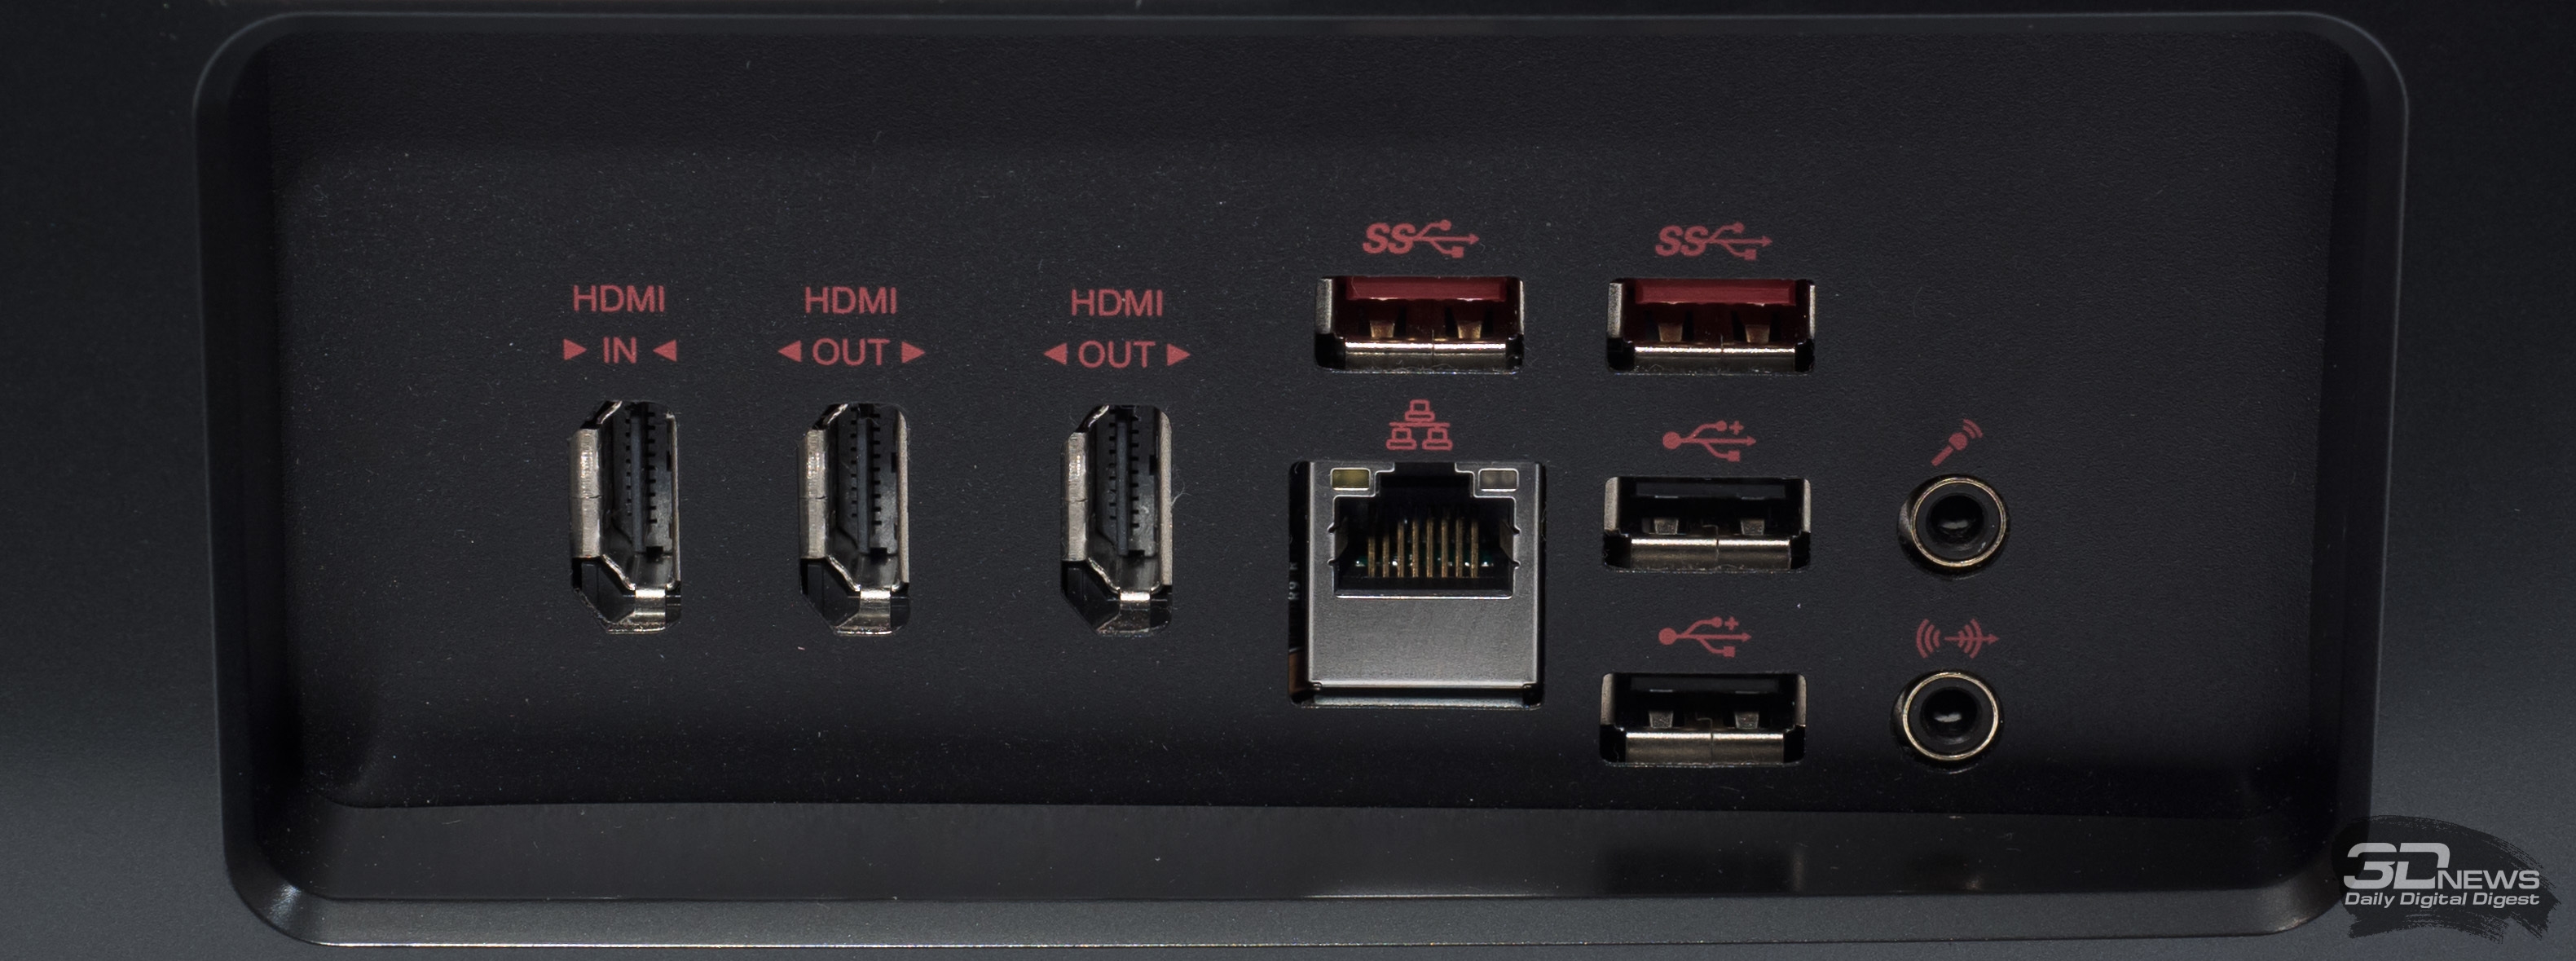 Разъемы моноблока. ASUS HDMI 2. MSI HDMI 1. Разъем HDMI 2.1. USB Port 2.0 HDMI процессор.